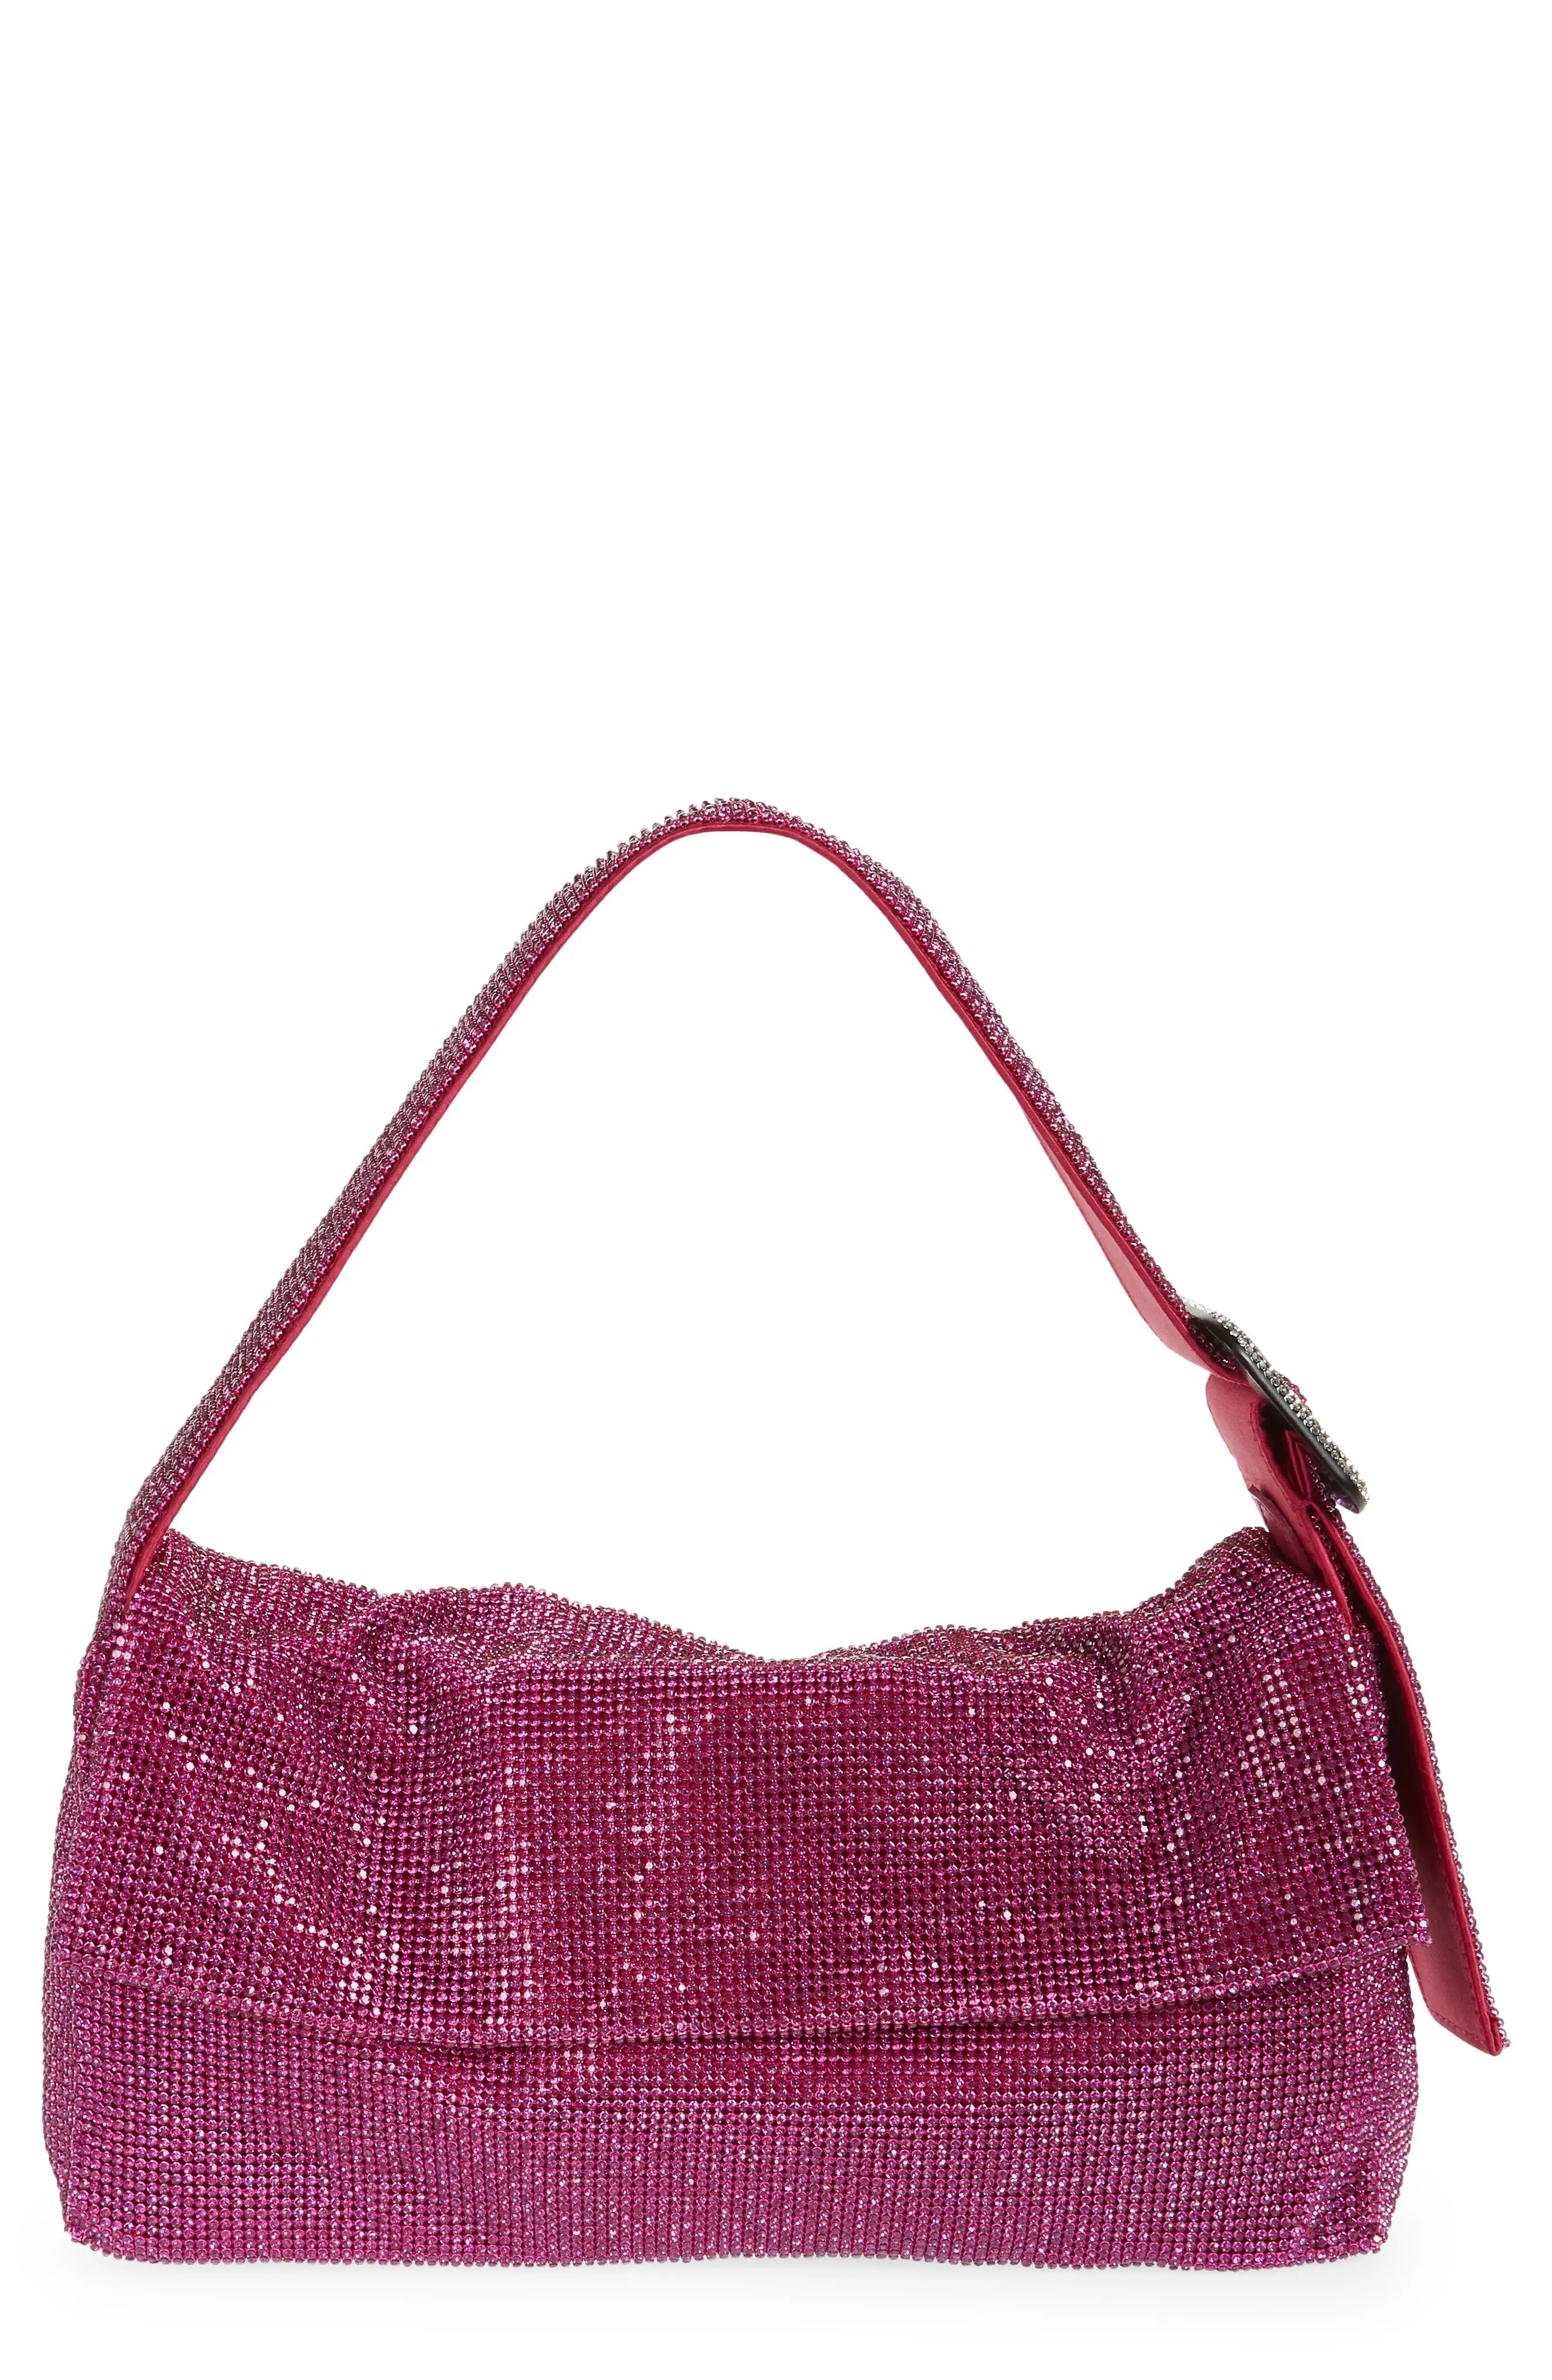 Benedetta Bruzziches Vitty La Grande Crystal Mesh Shoulder Bag in Purple at Nordstrom | Nordstrom